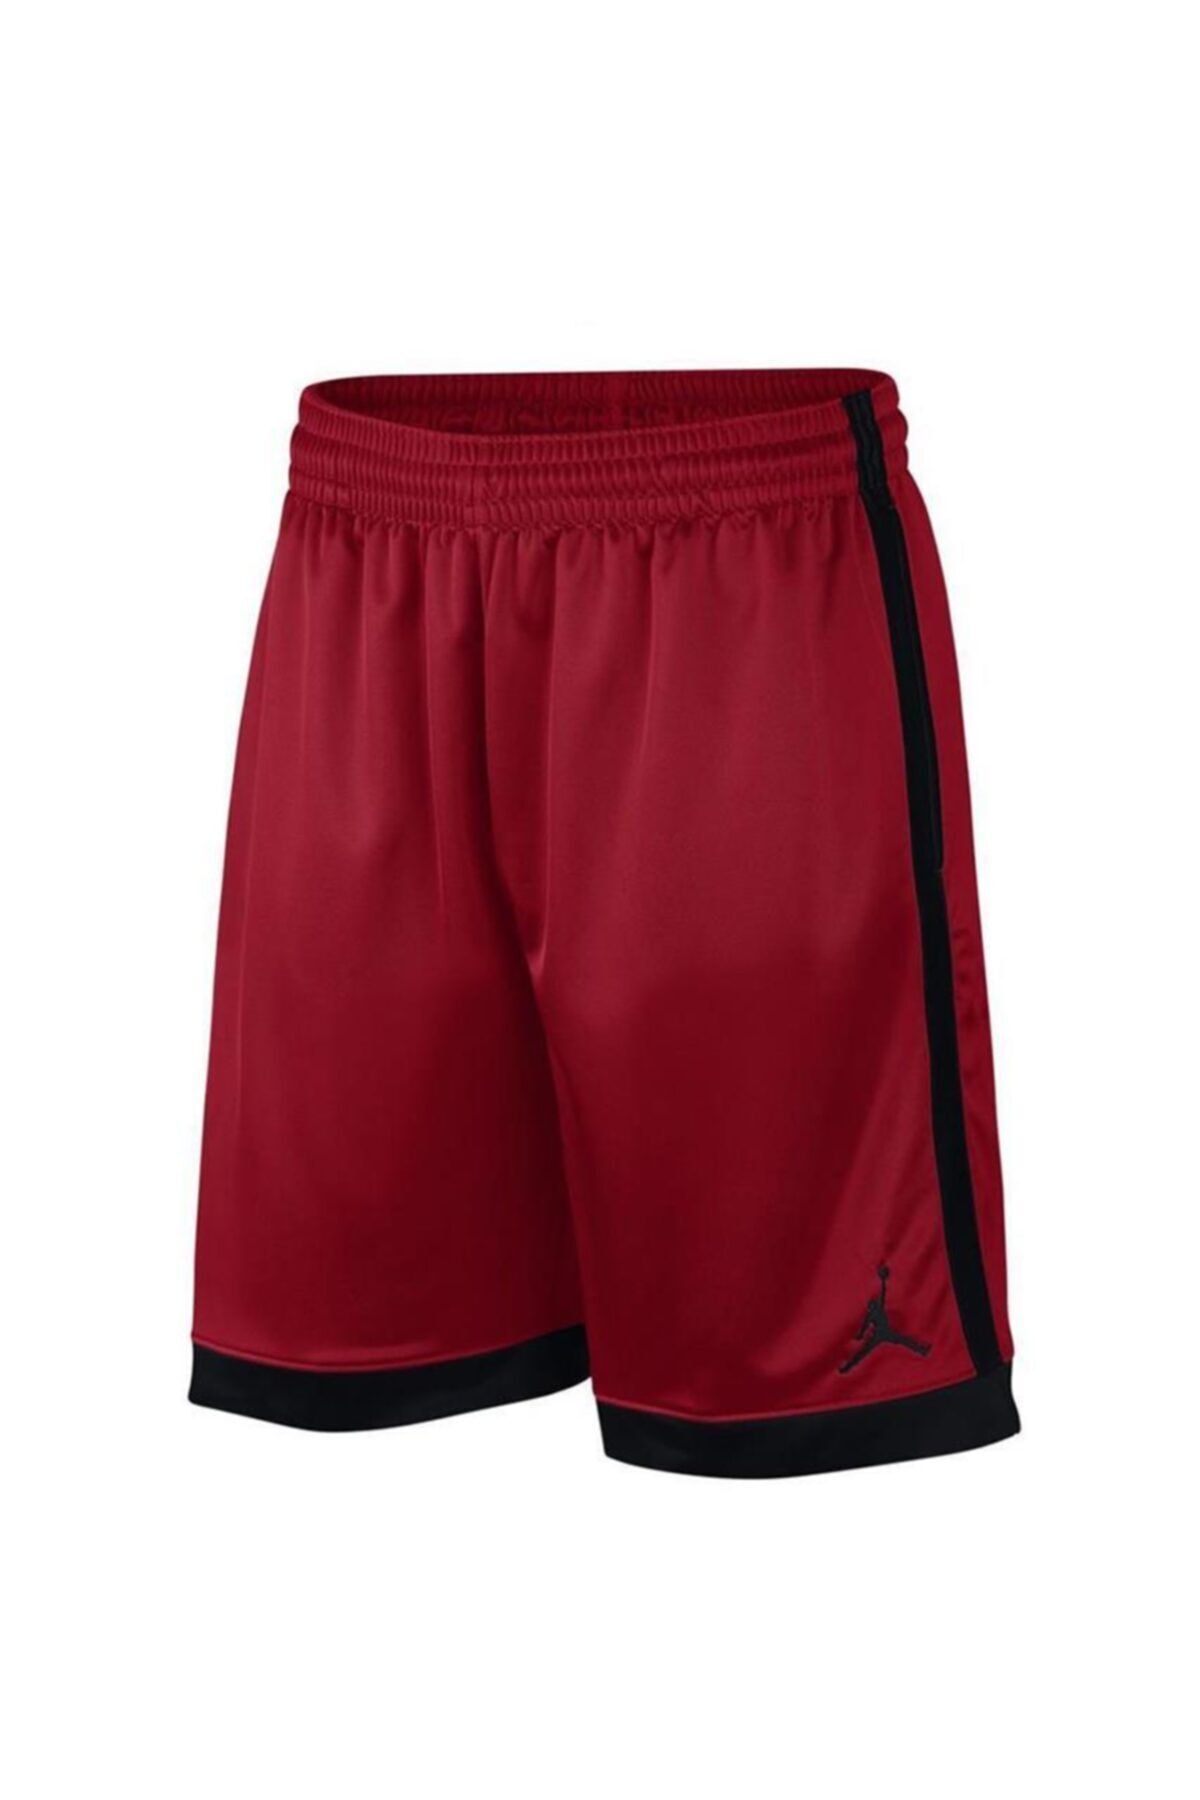 Nike Erkek Şort - Shimmer Basketbol Short - AJ1122-687